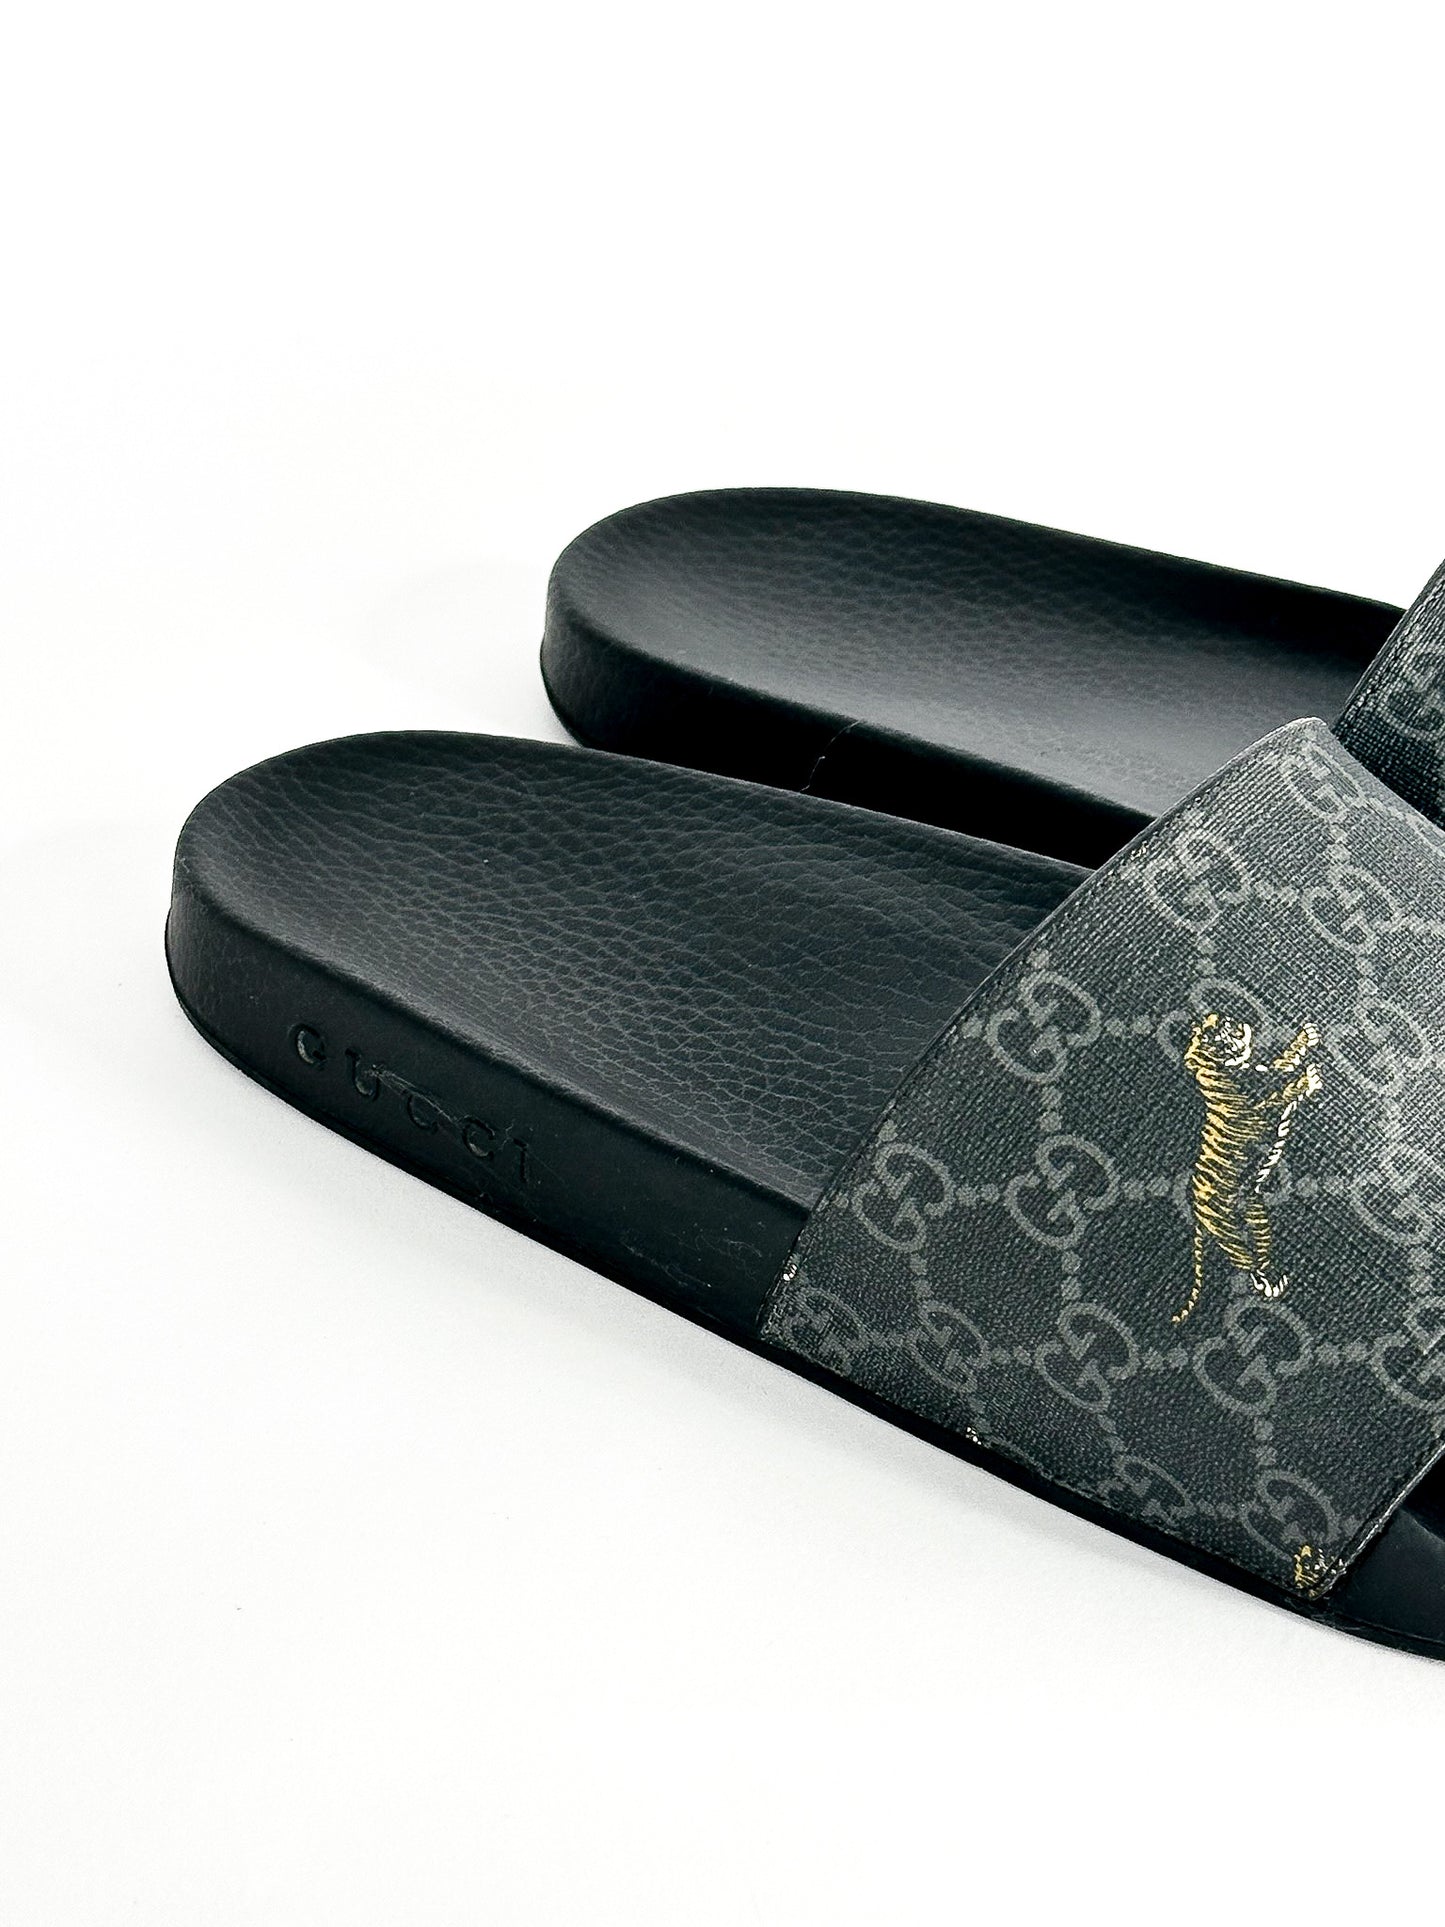 Gucci Black GG Supreme Tiger Flat
Slides Size 11